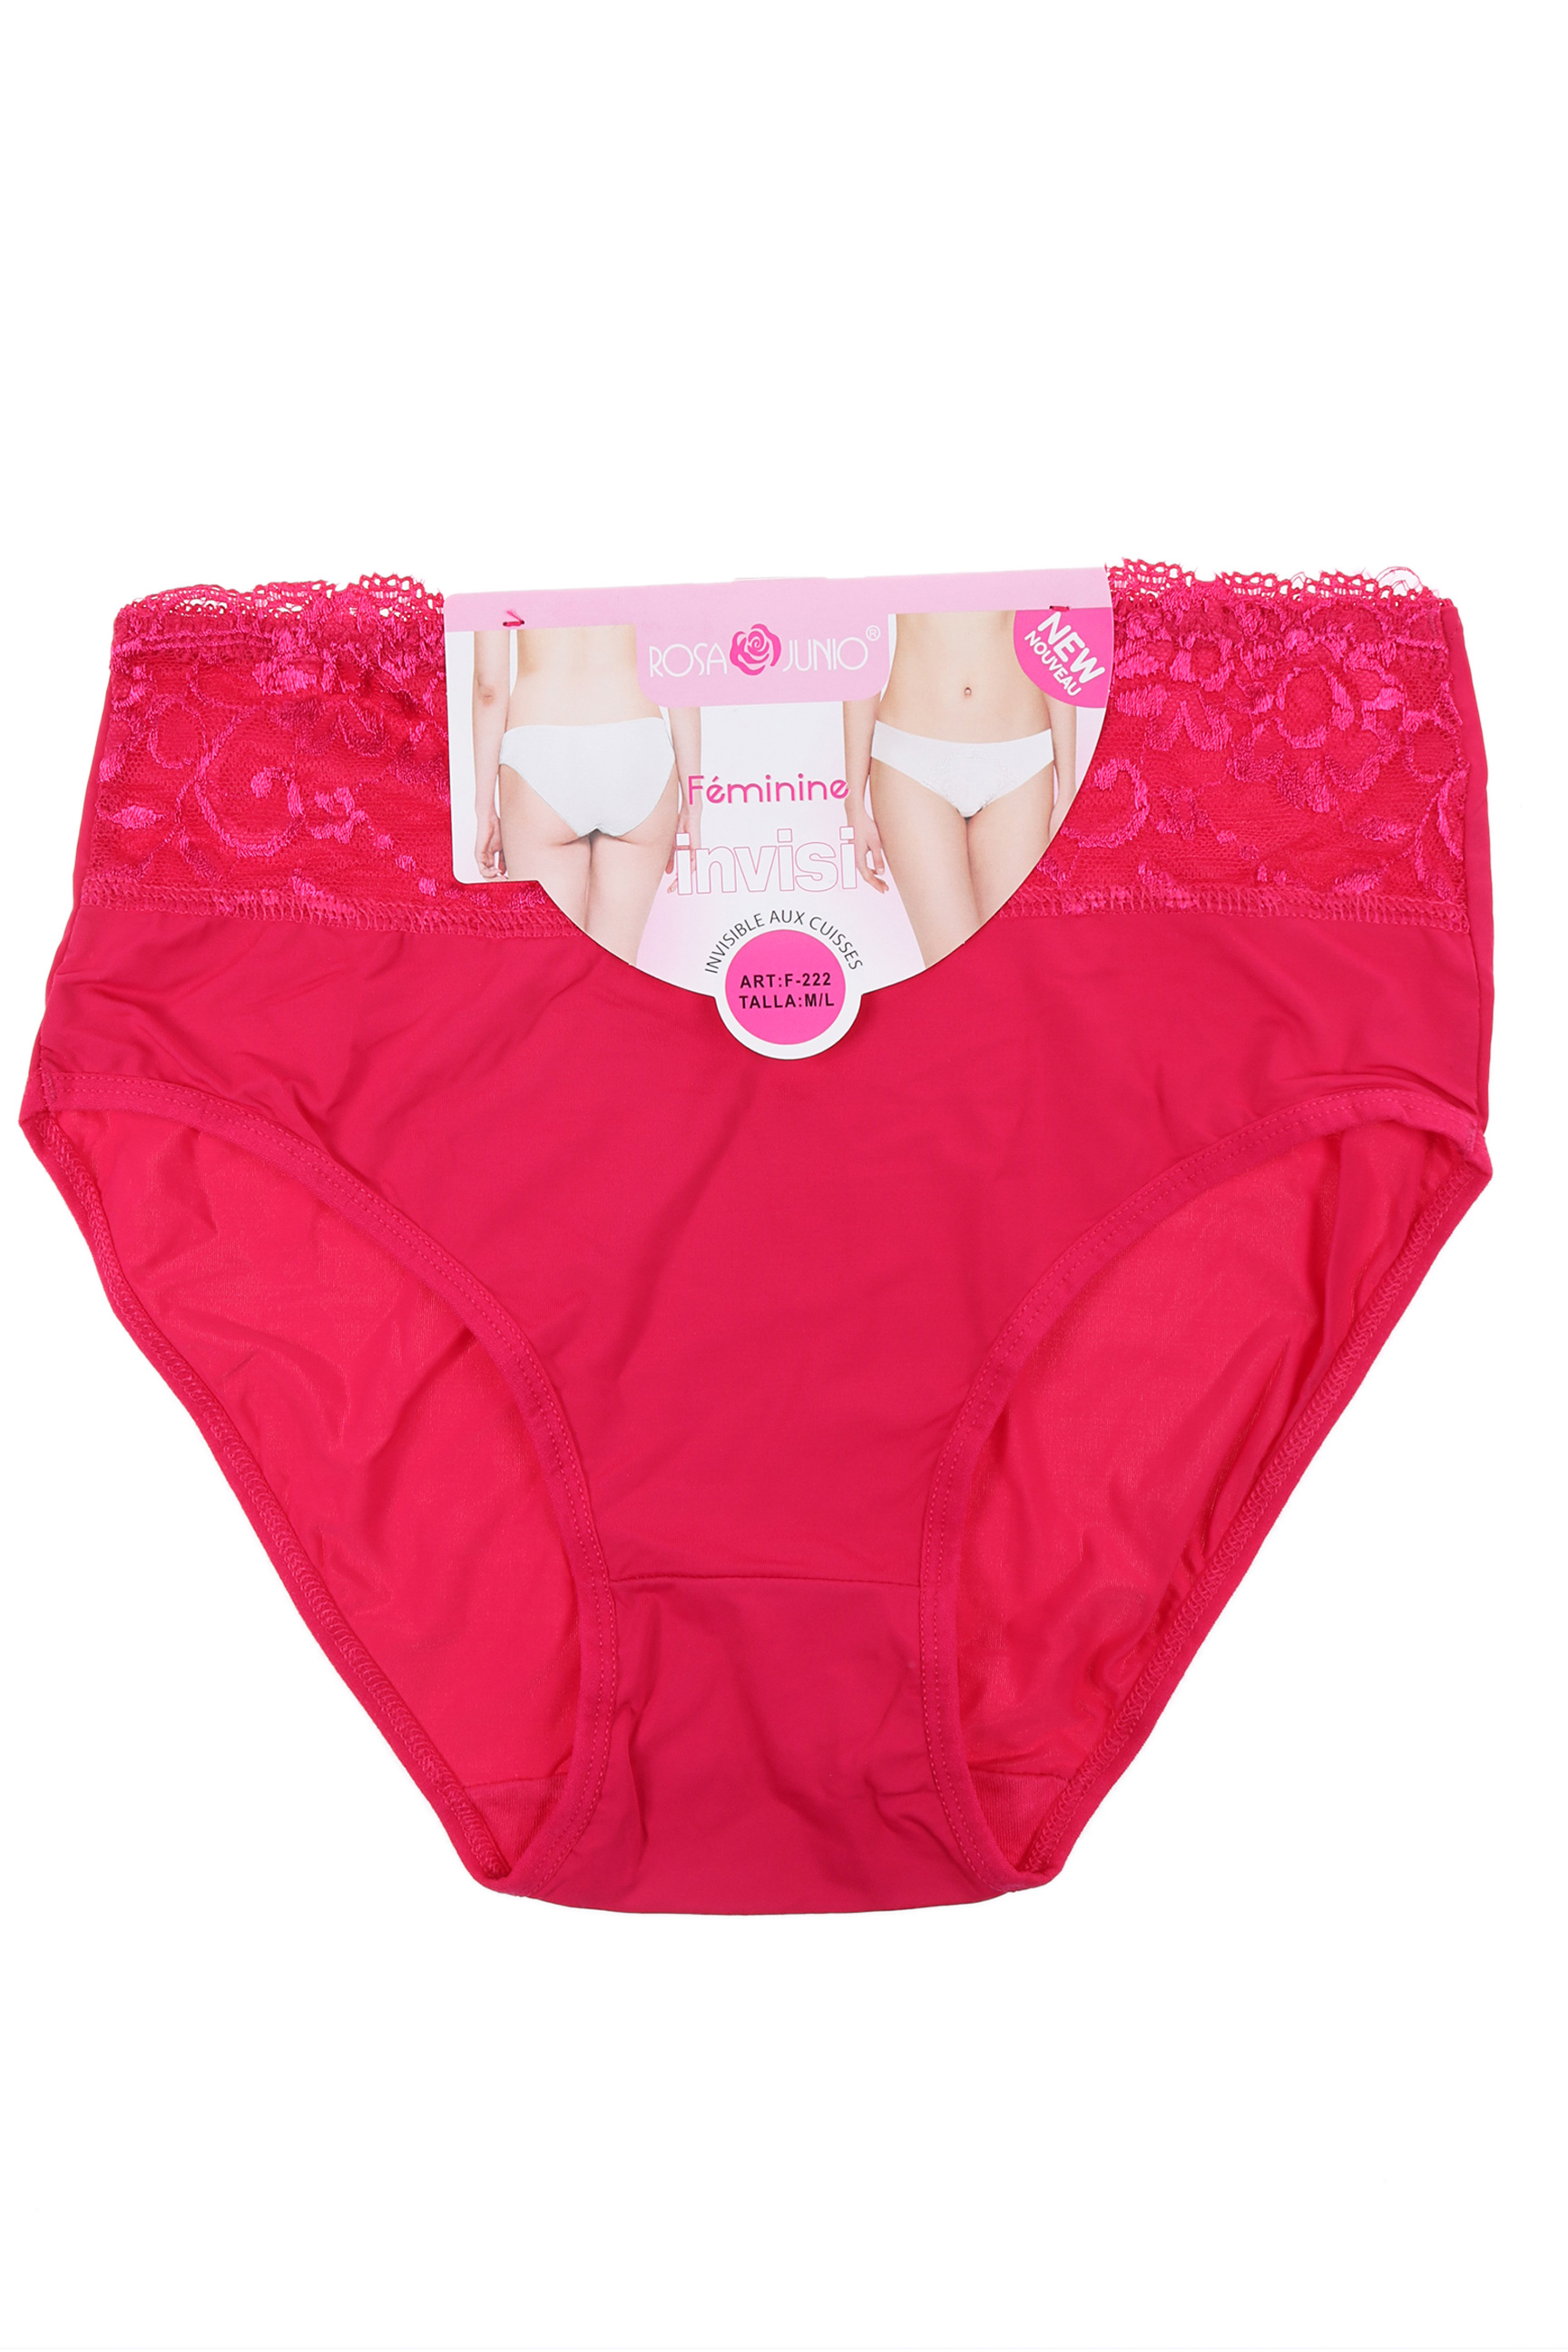 rosa junio underwear